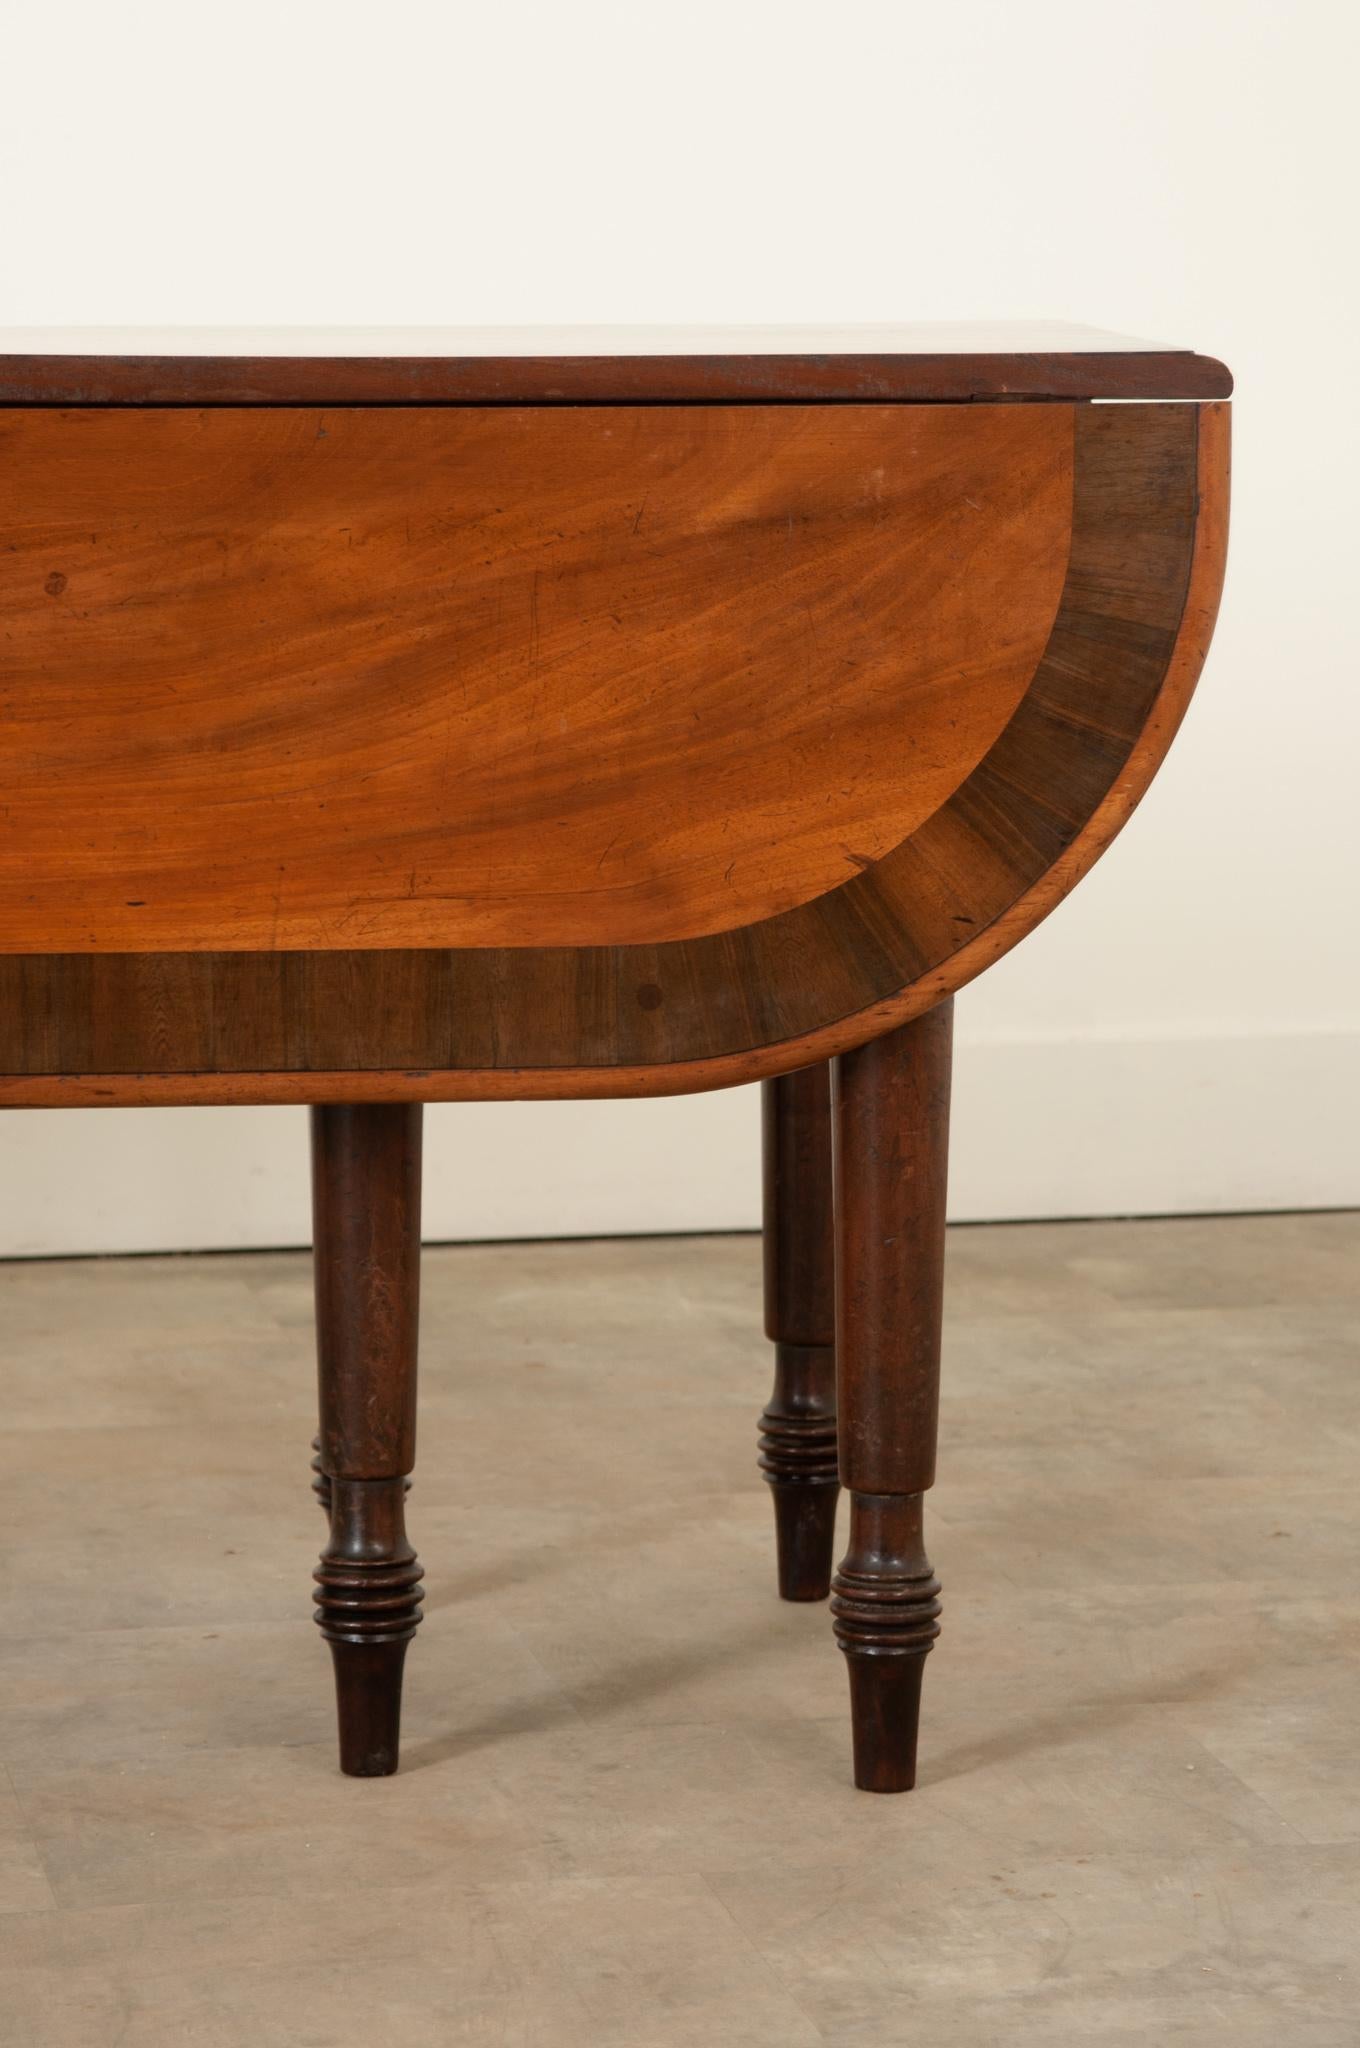 Victorian English 19th Century Mahogany Gateleg Drop-leaf Table For Sale